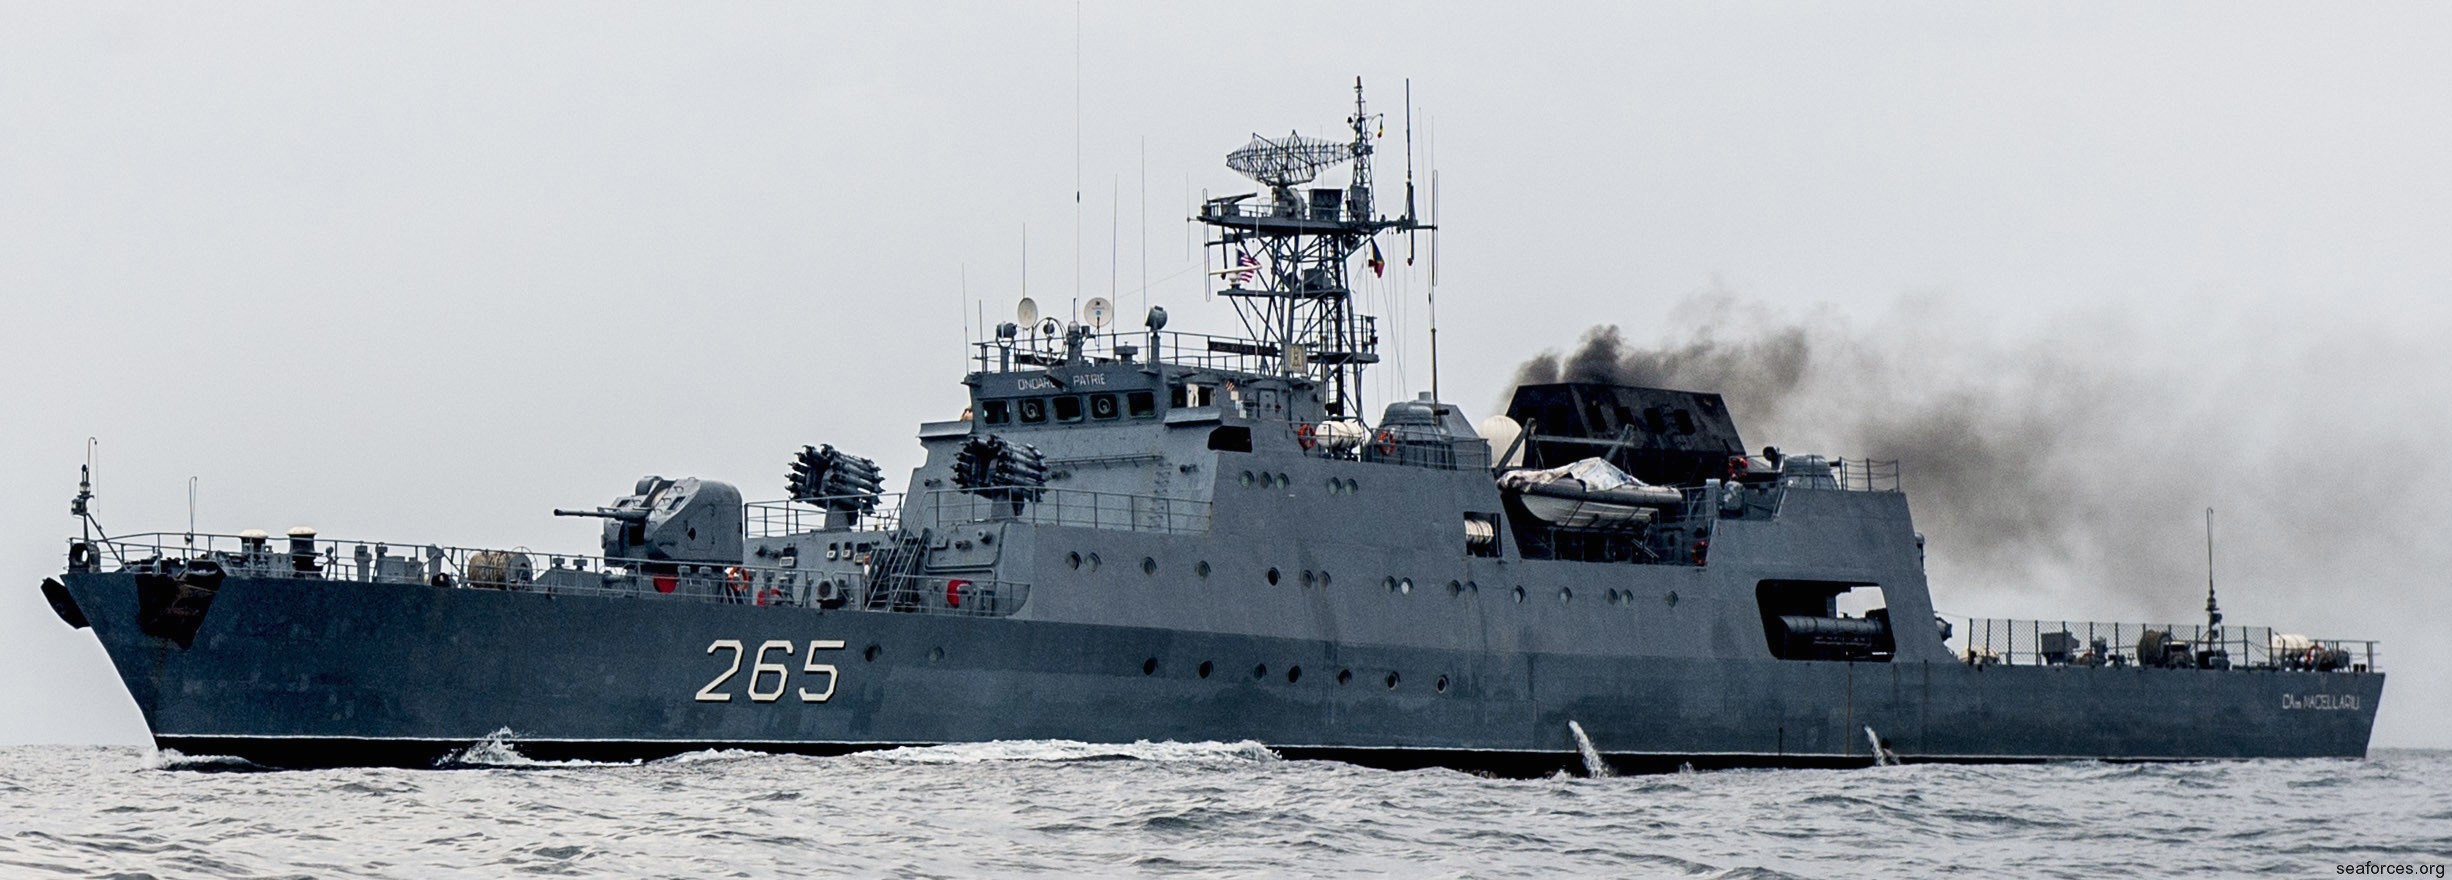 f-265 ros contraamiral horia macellariu tetal-ii class corvette romanian navy 02